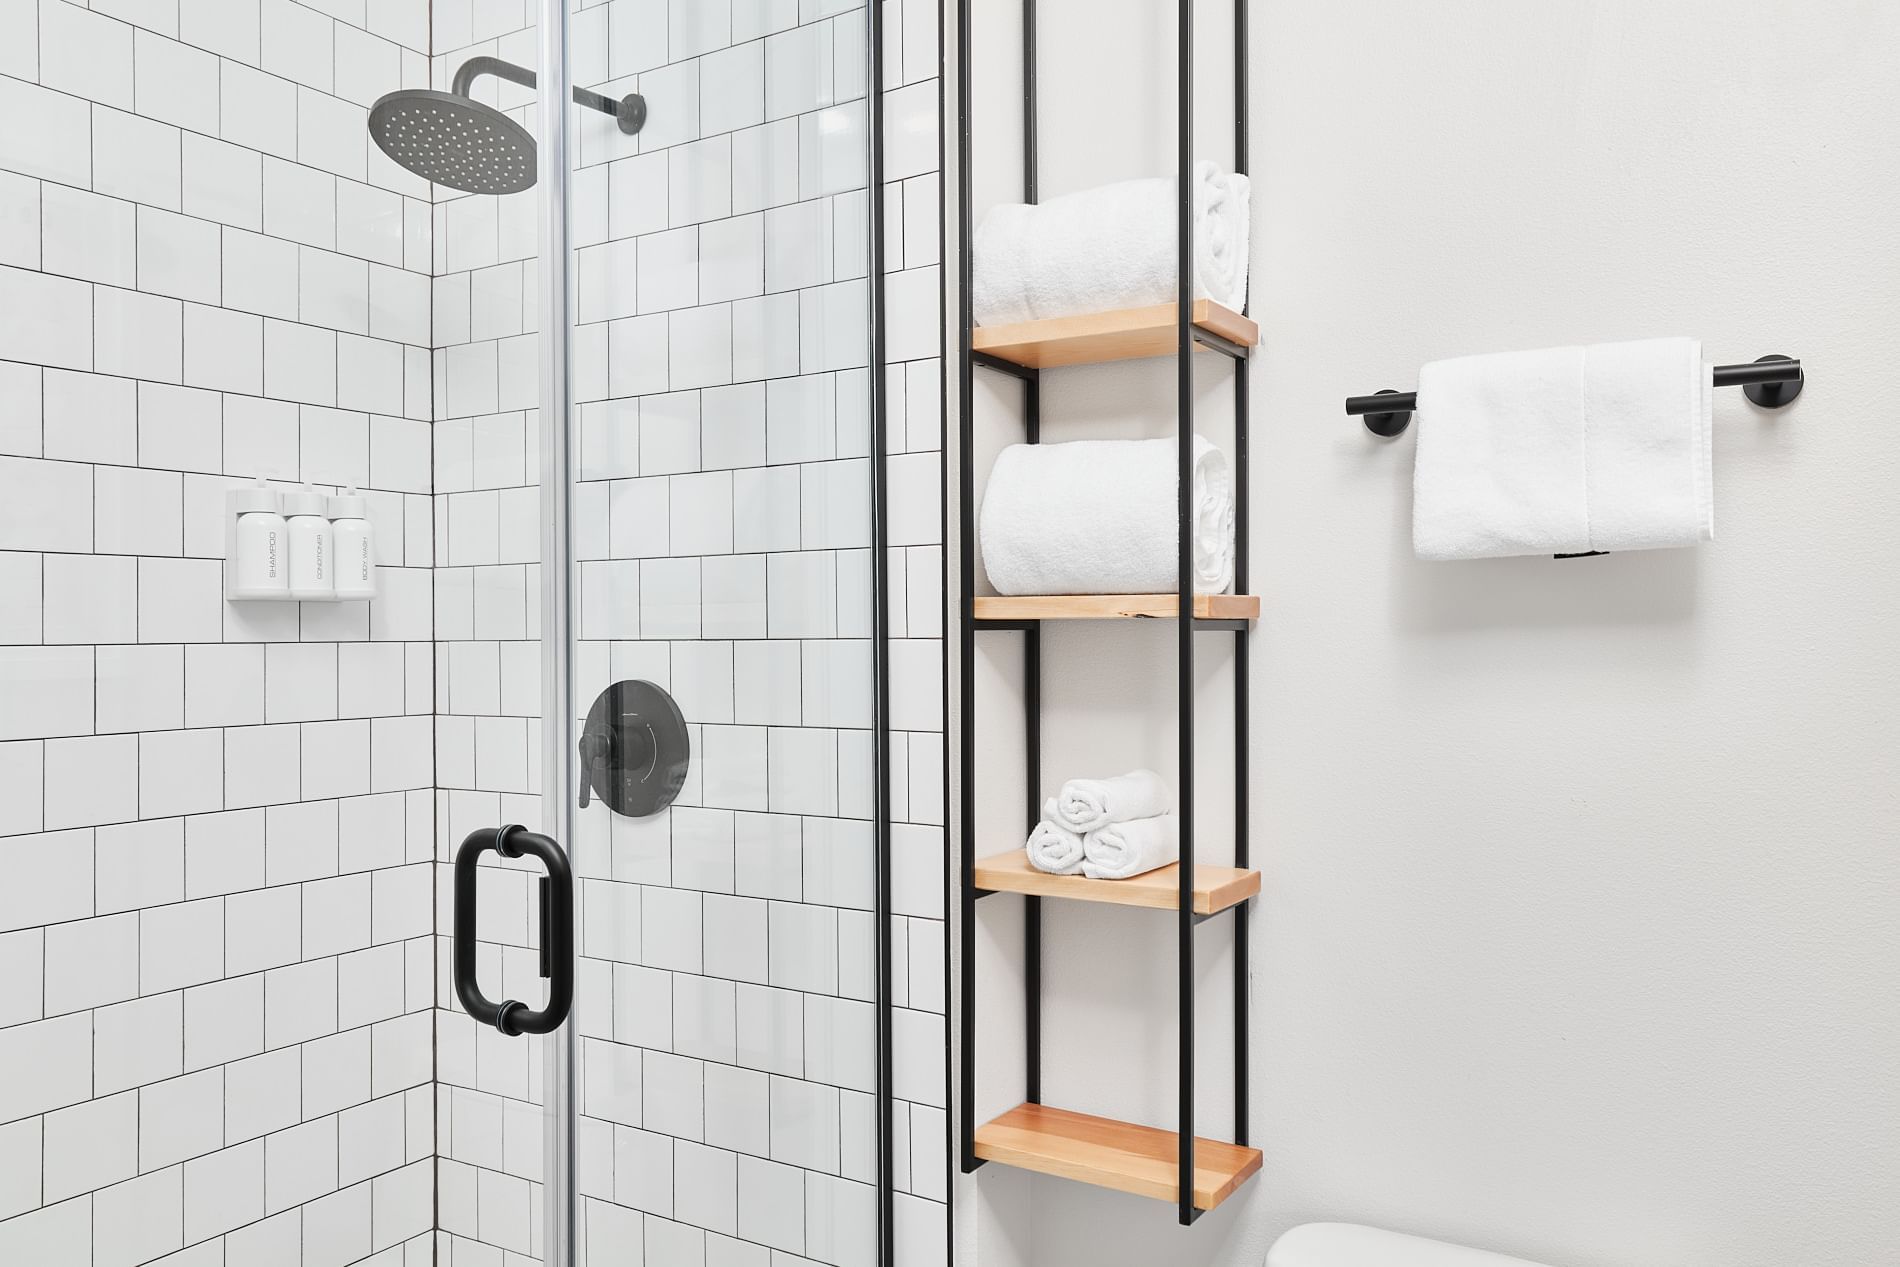 Shower & towel rack in junior suite bathroom at Kinship Landing